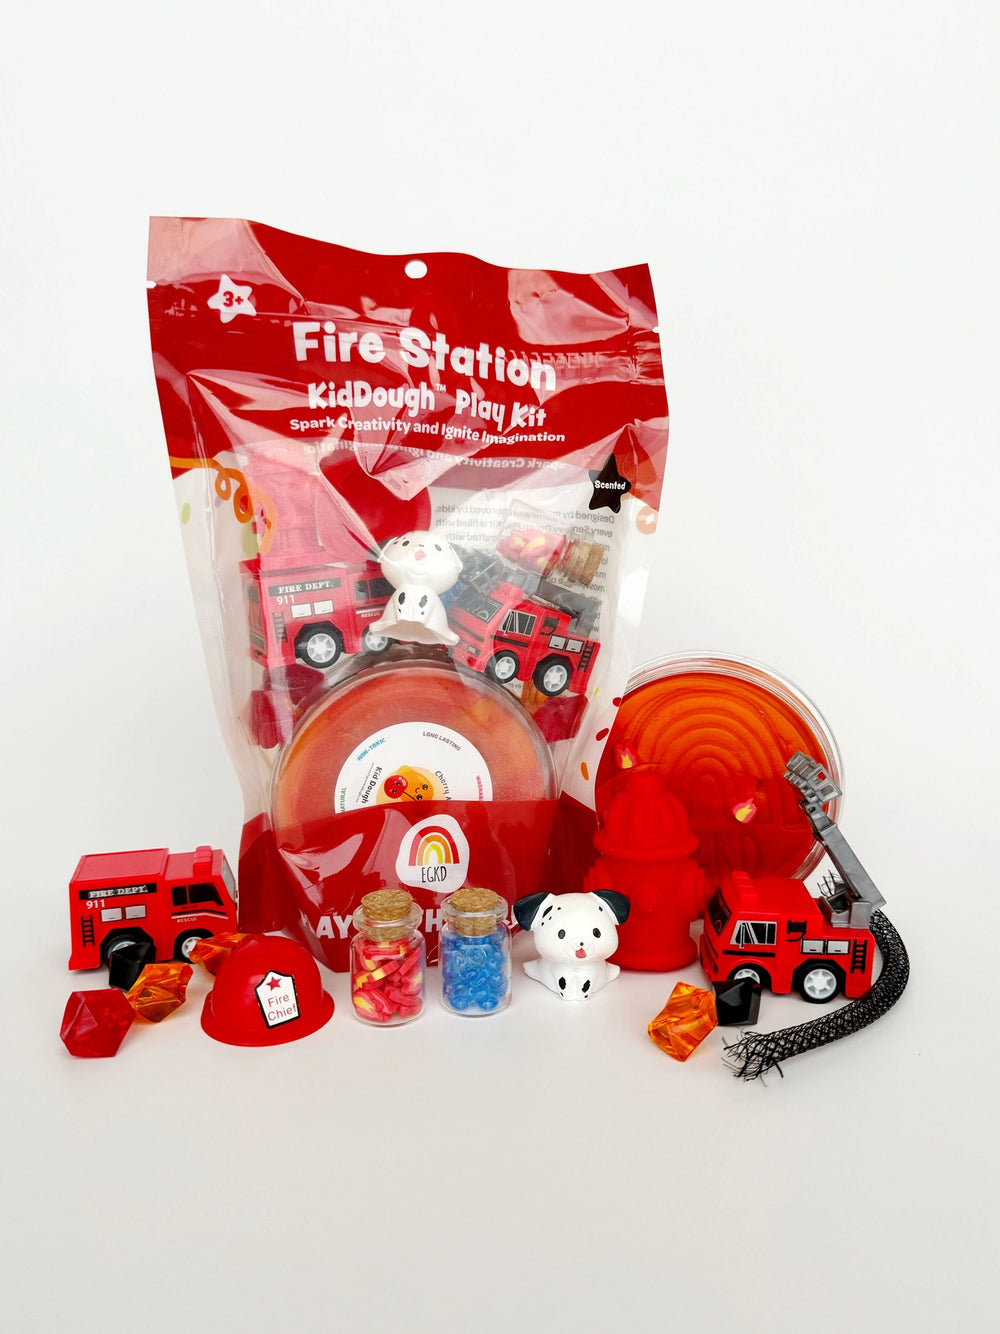 Fire Station (Cherry Mango) Kiddough Play Kit